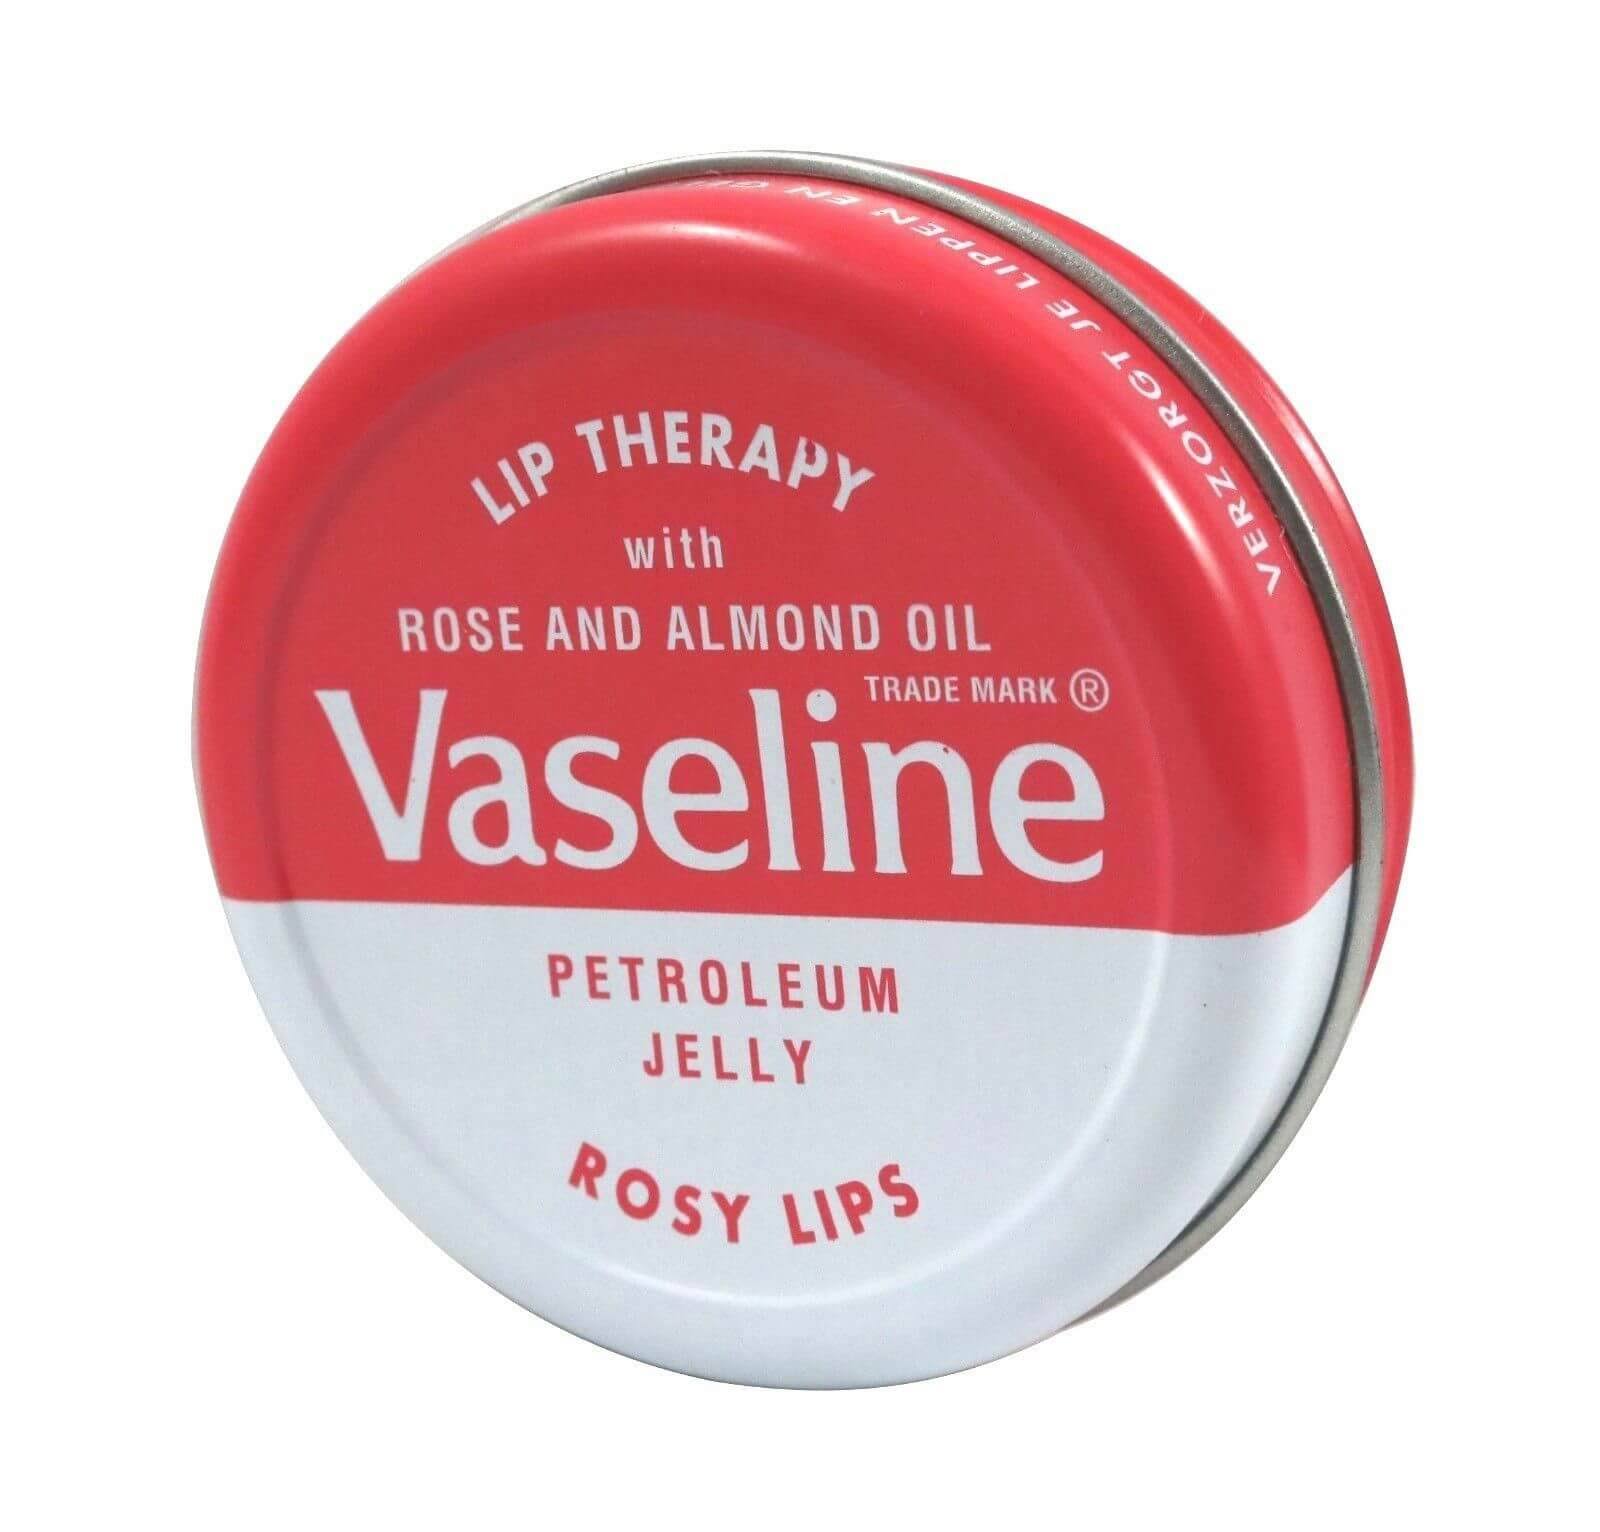 Vaseline Lip Therapy Rosy Lips 20 G